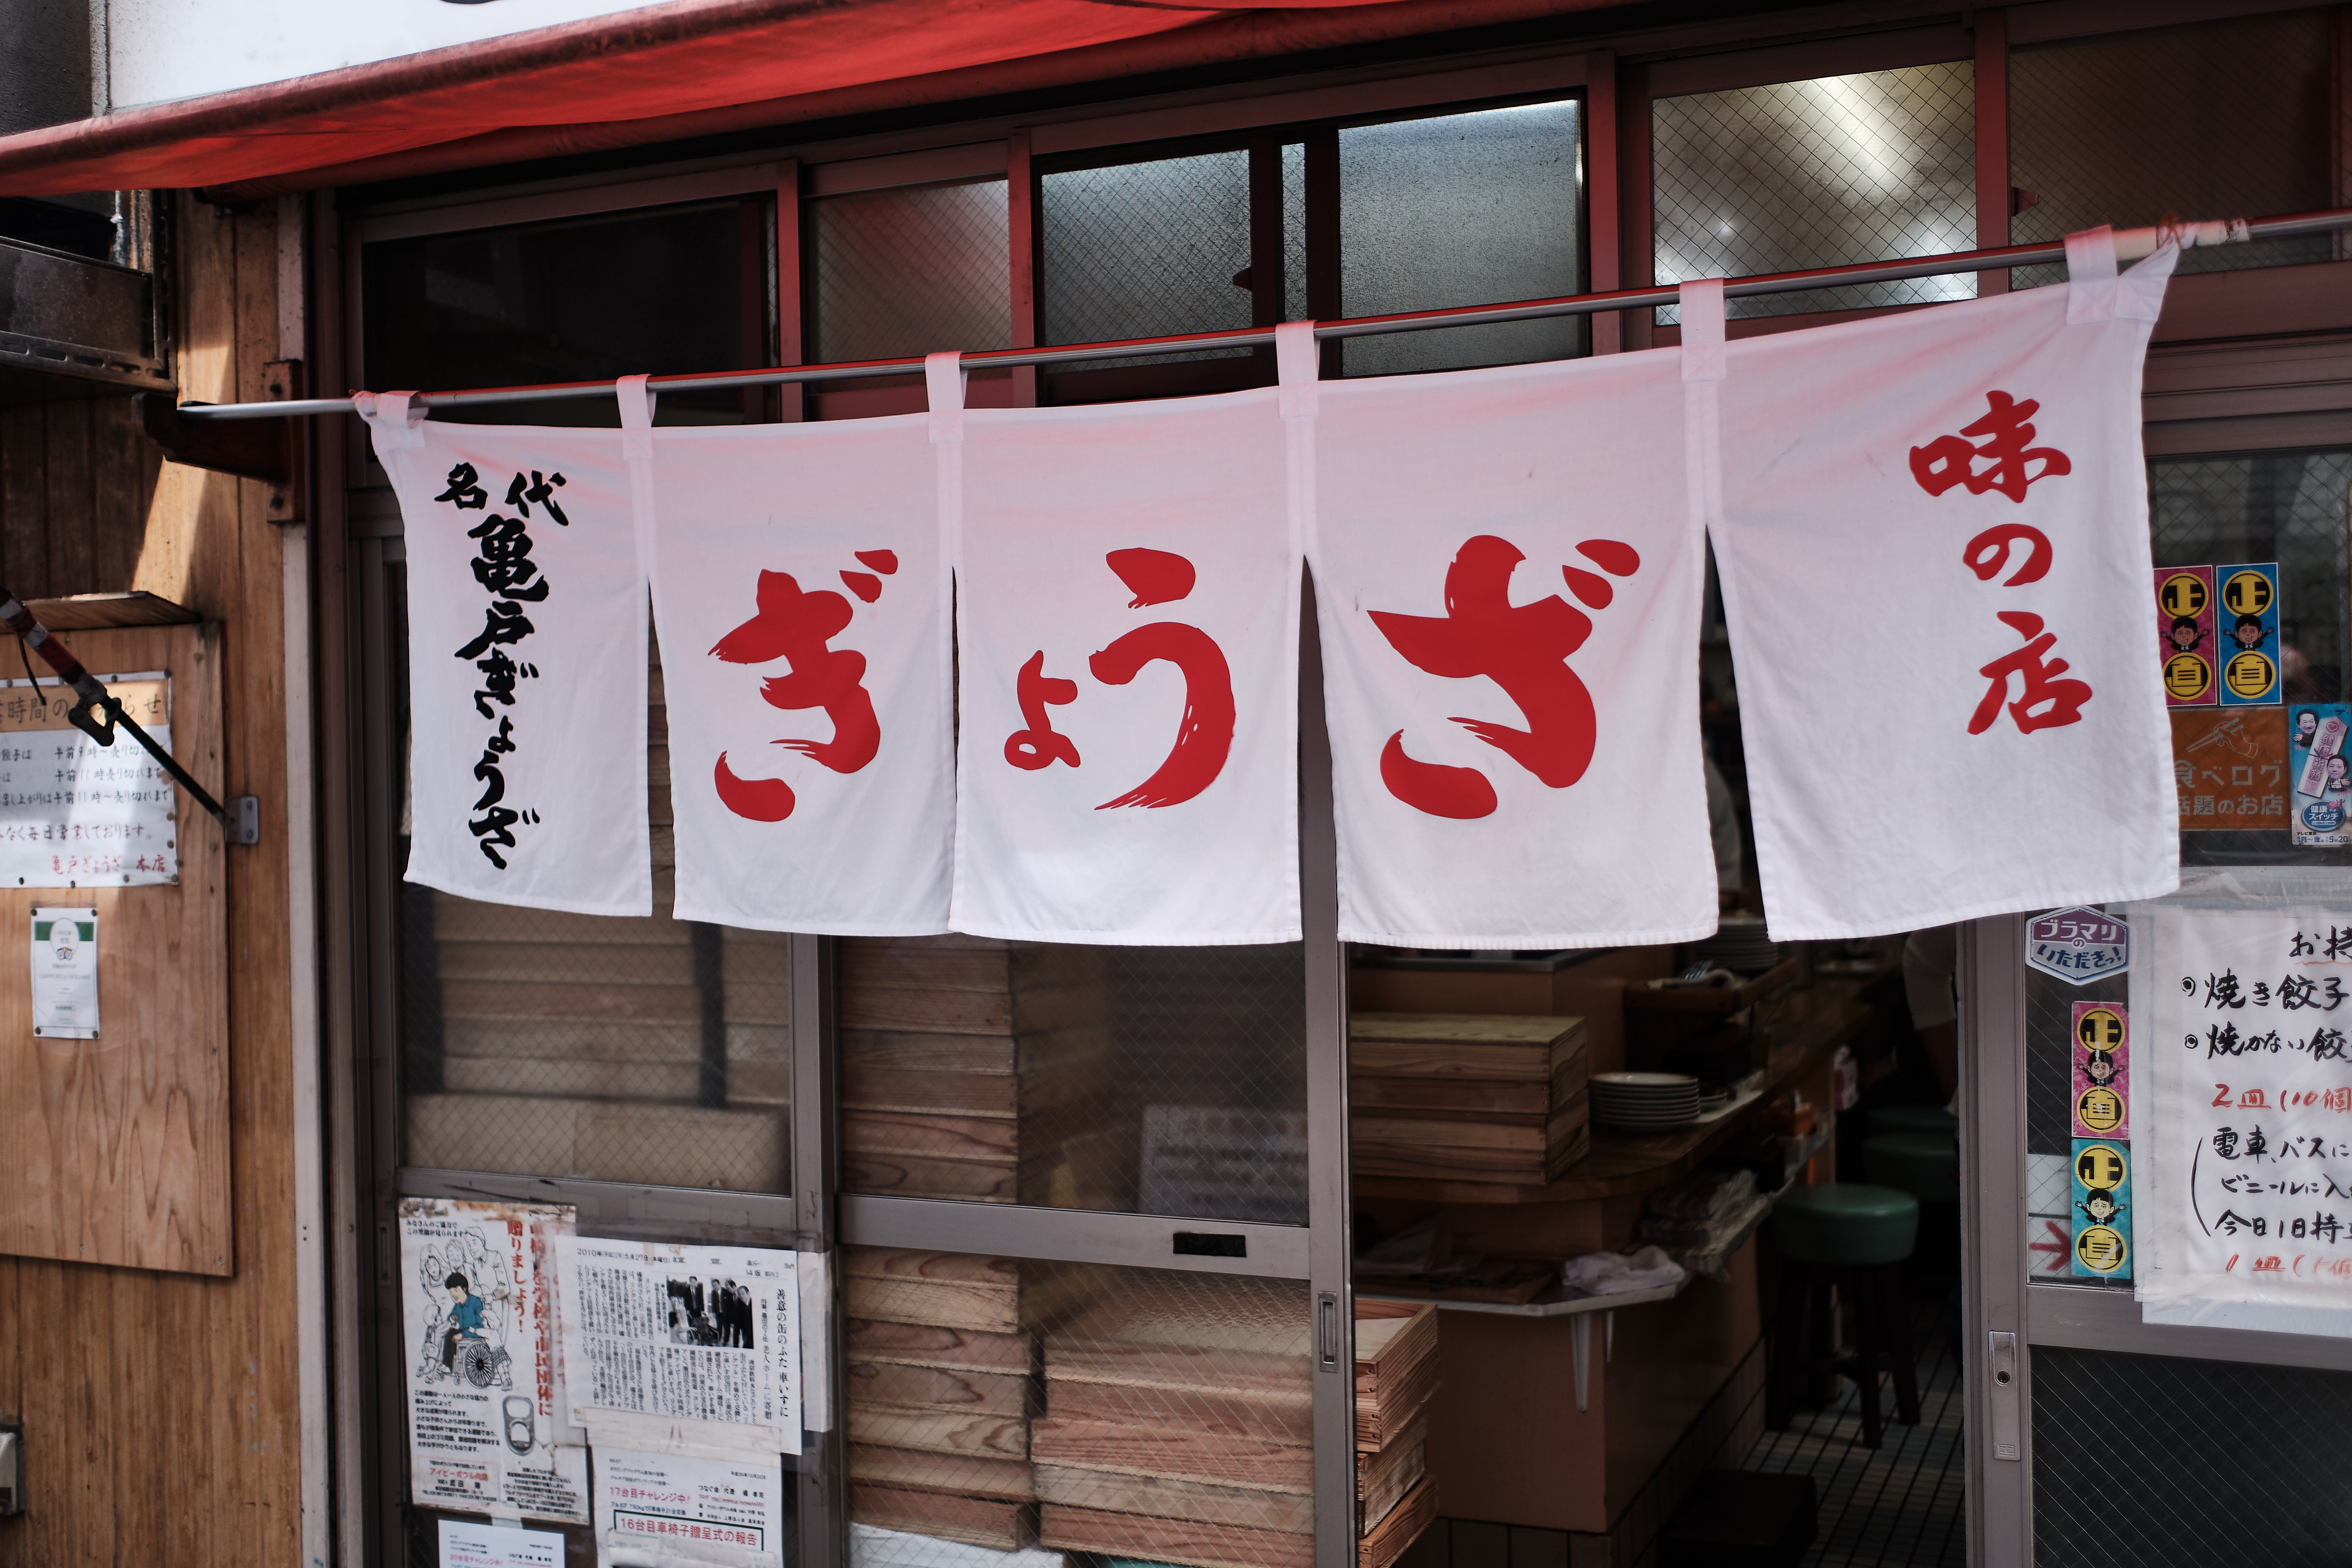 The entrance to Kameido Gyoza Main Shop